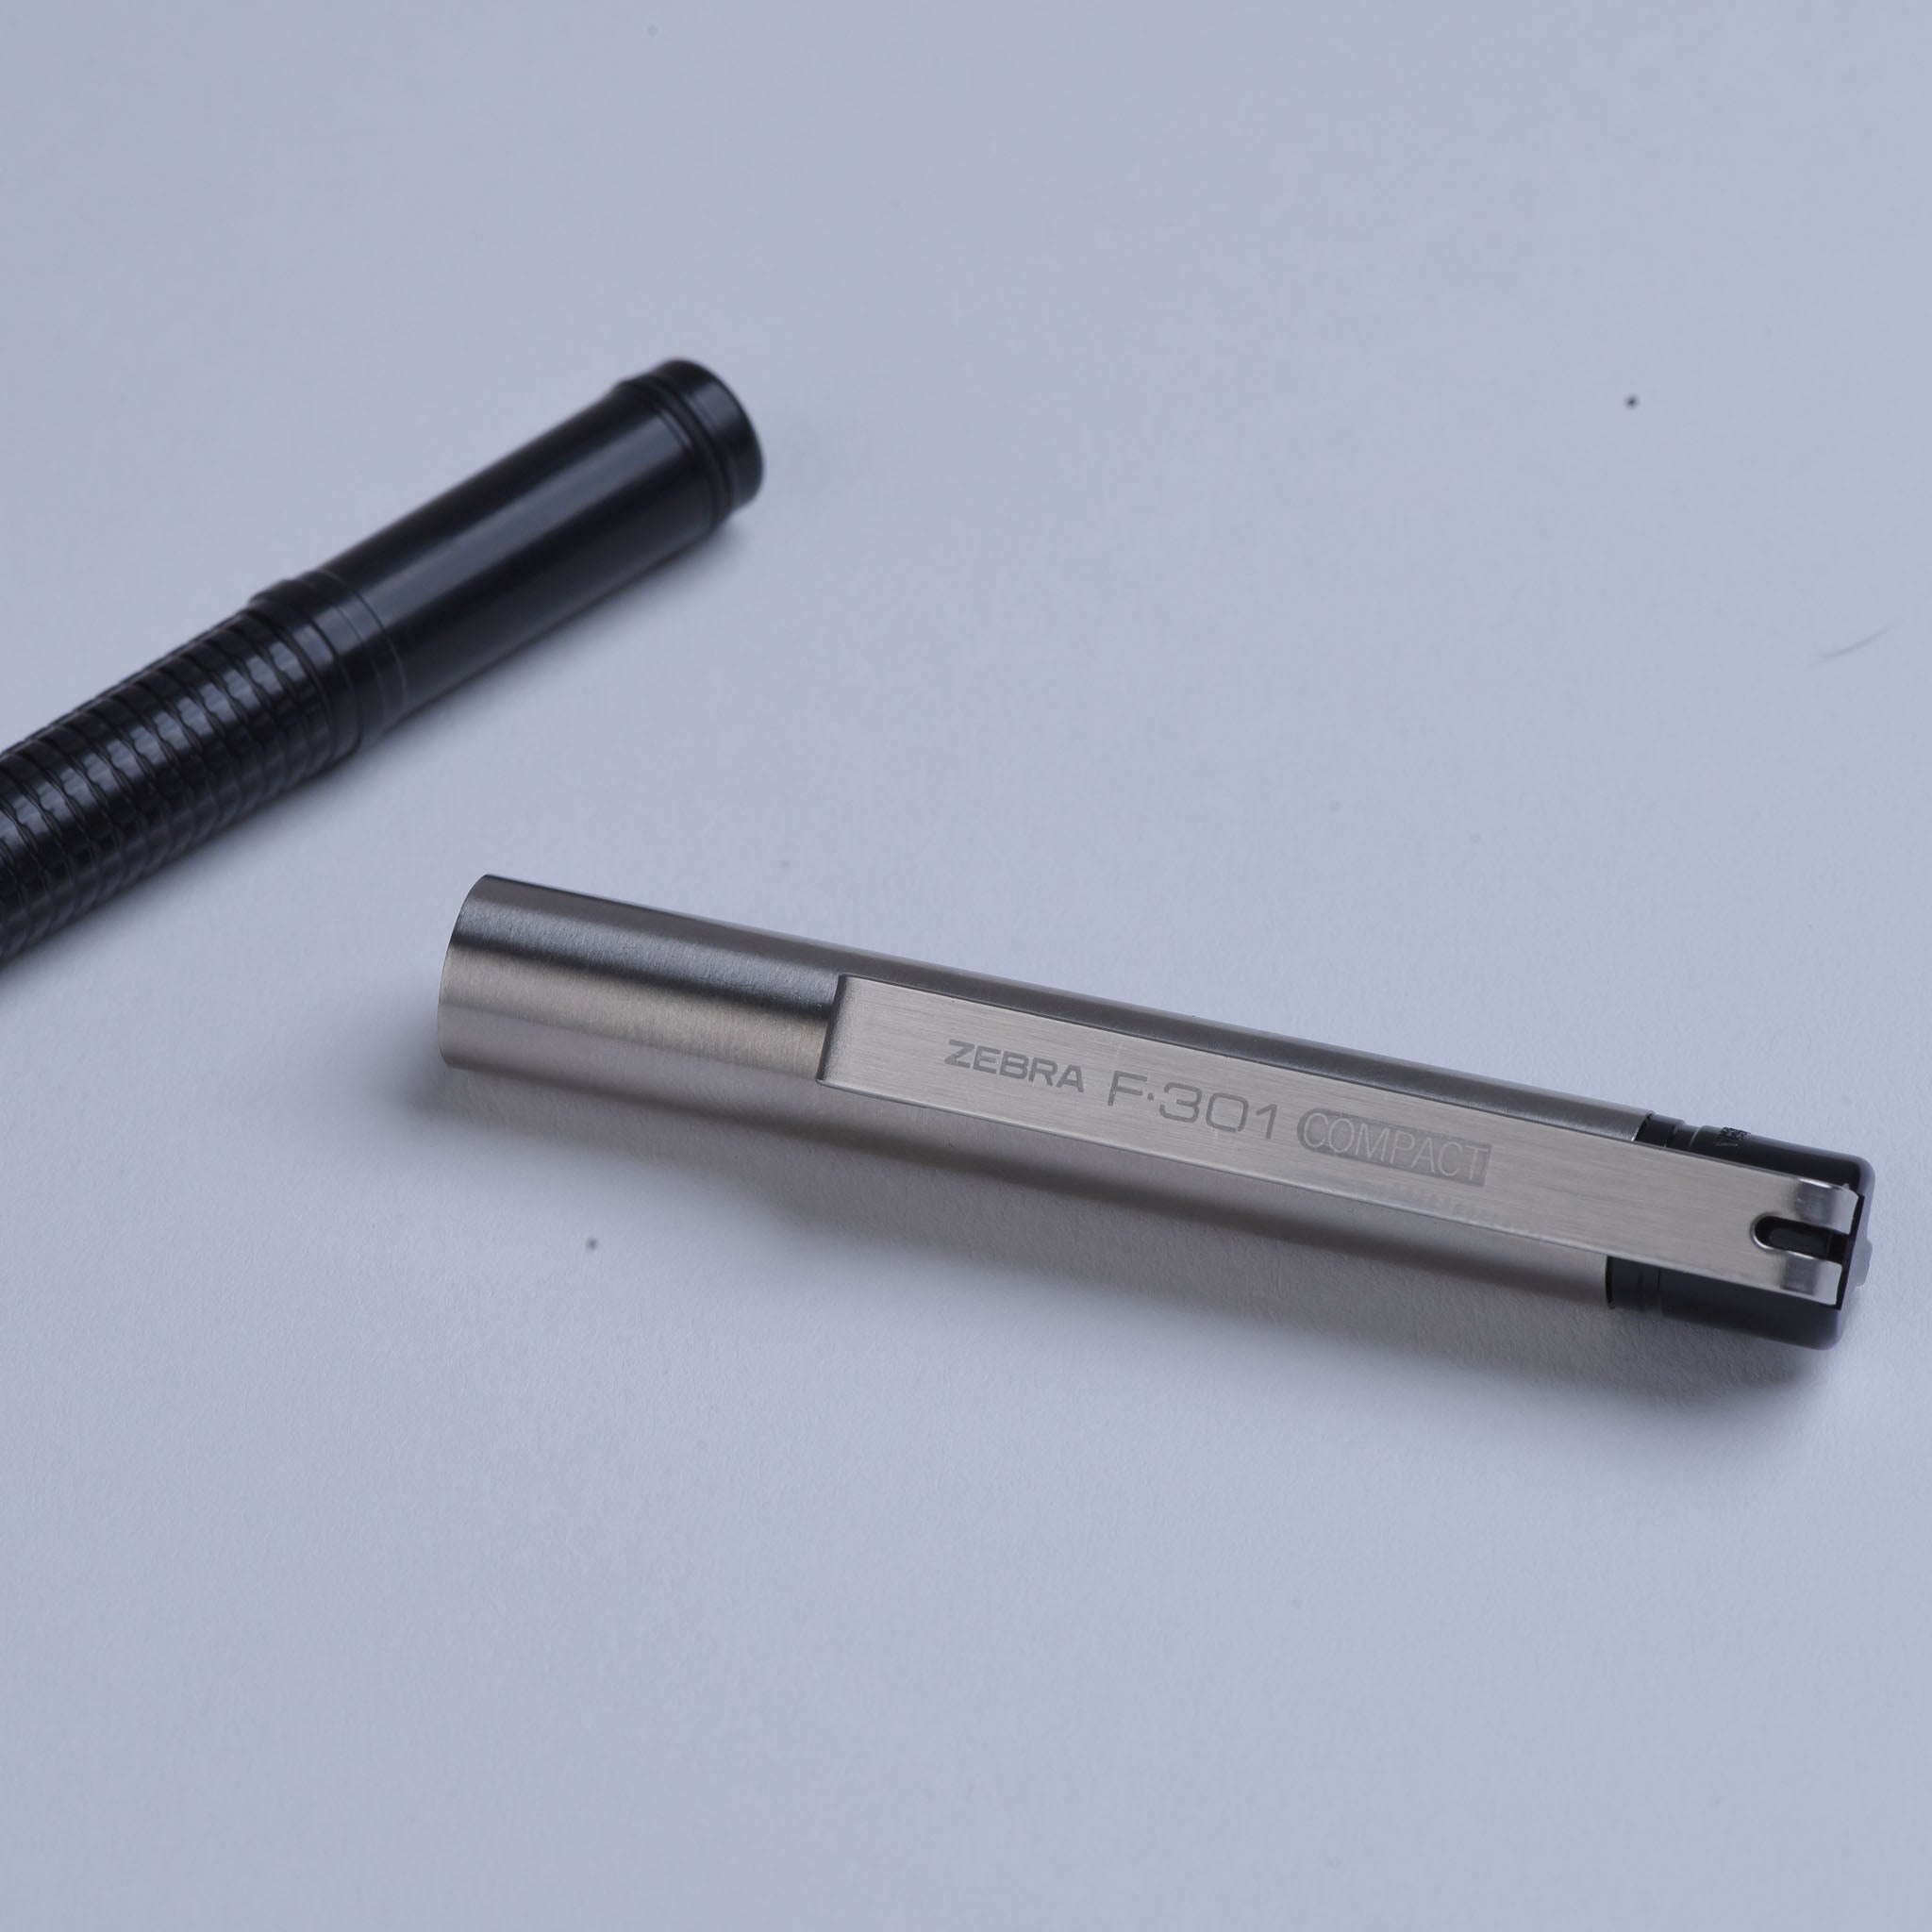 F-301 Compact Ballpoint Pen